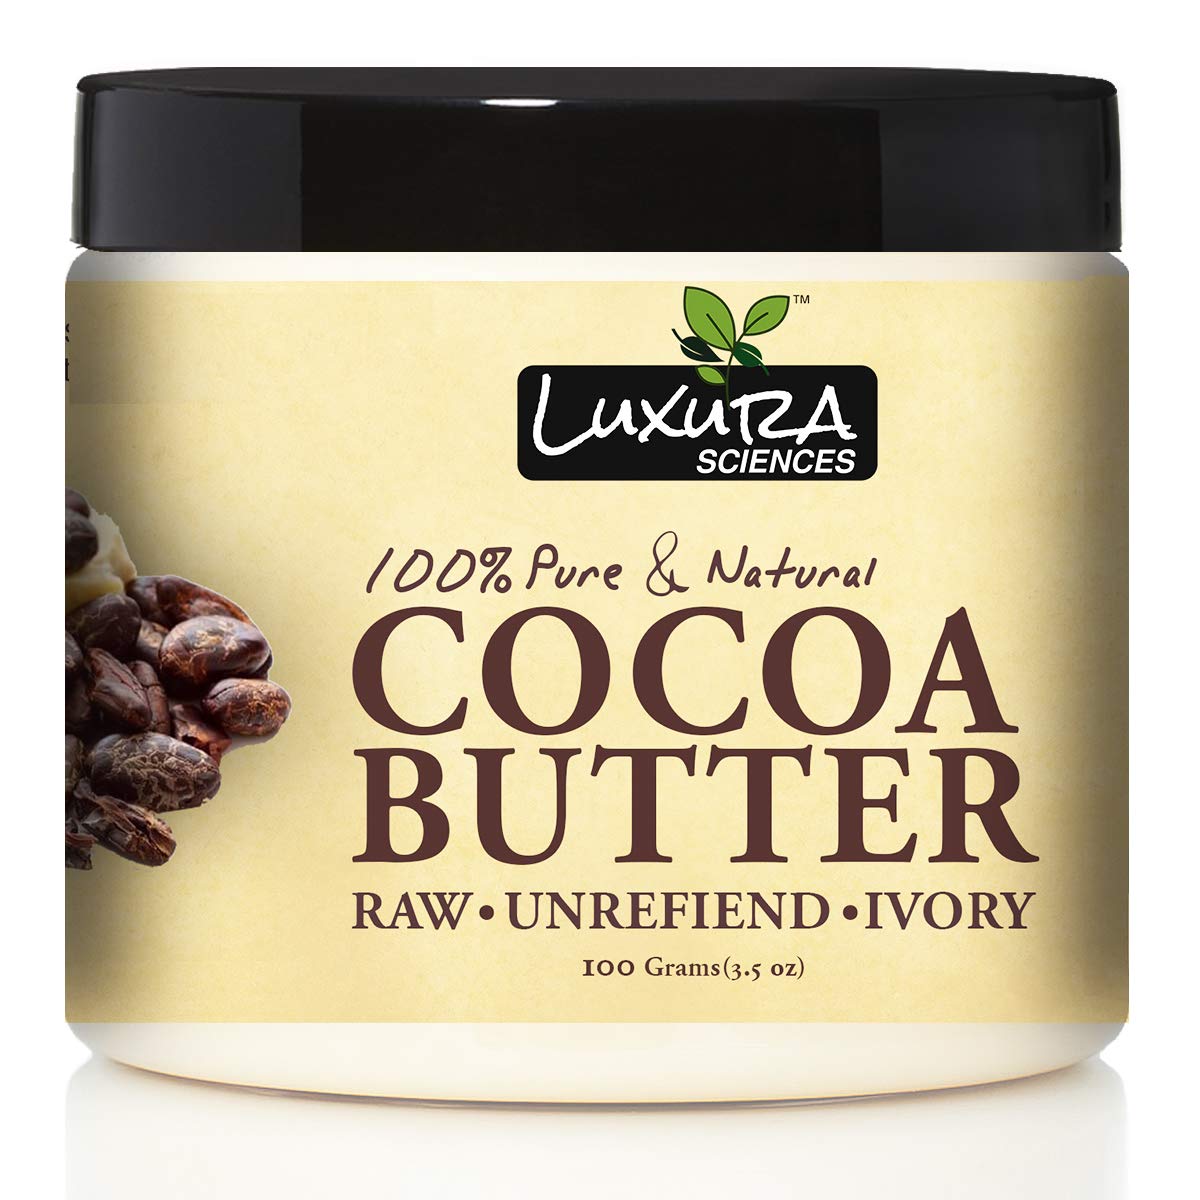 Luxura Sciences Cocoa Butter